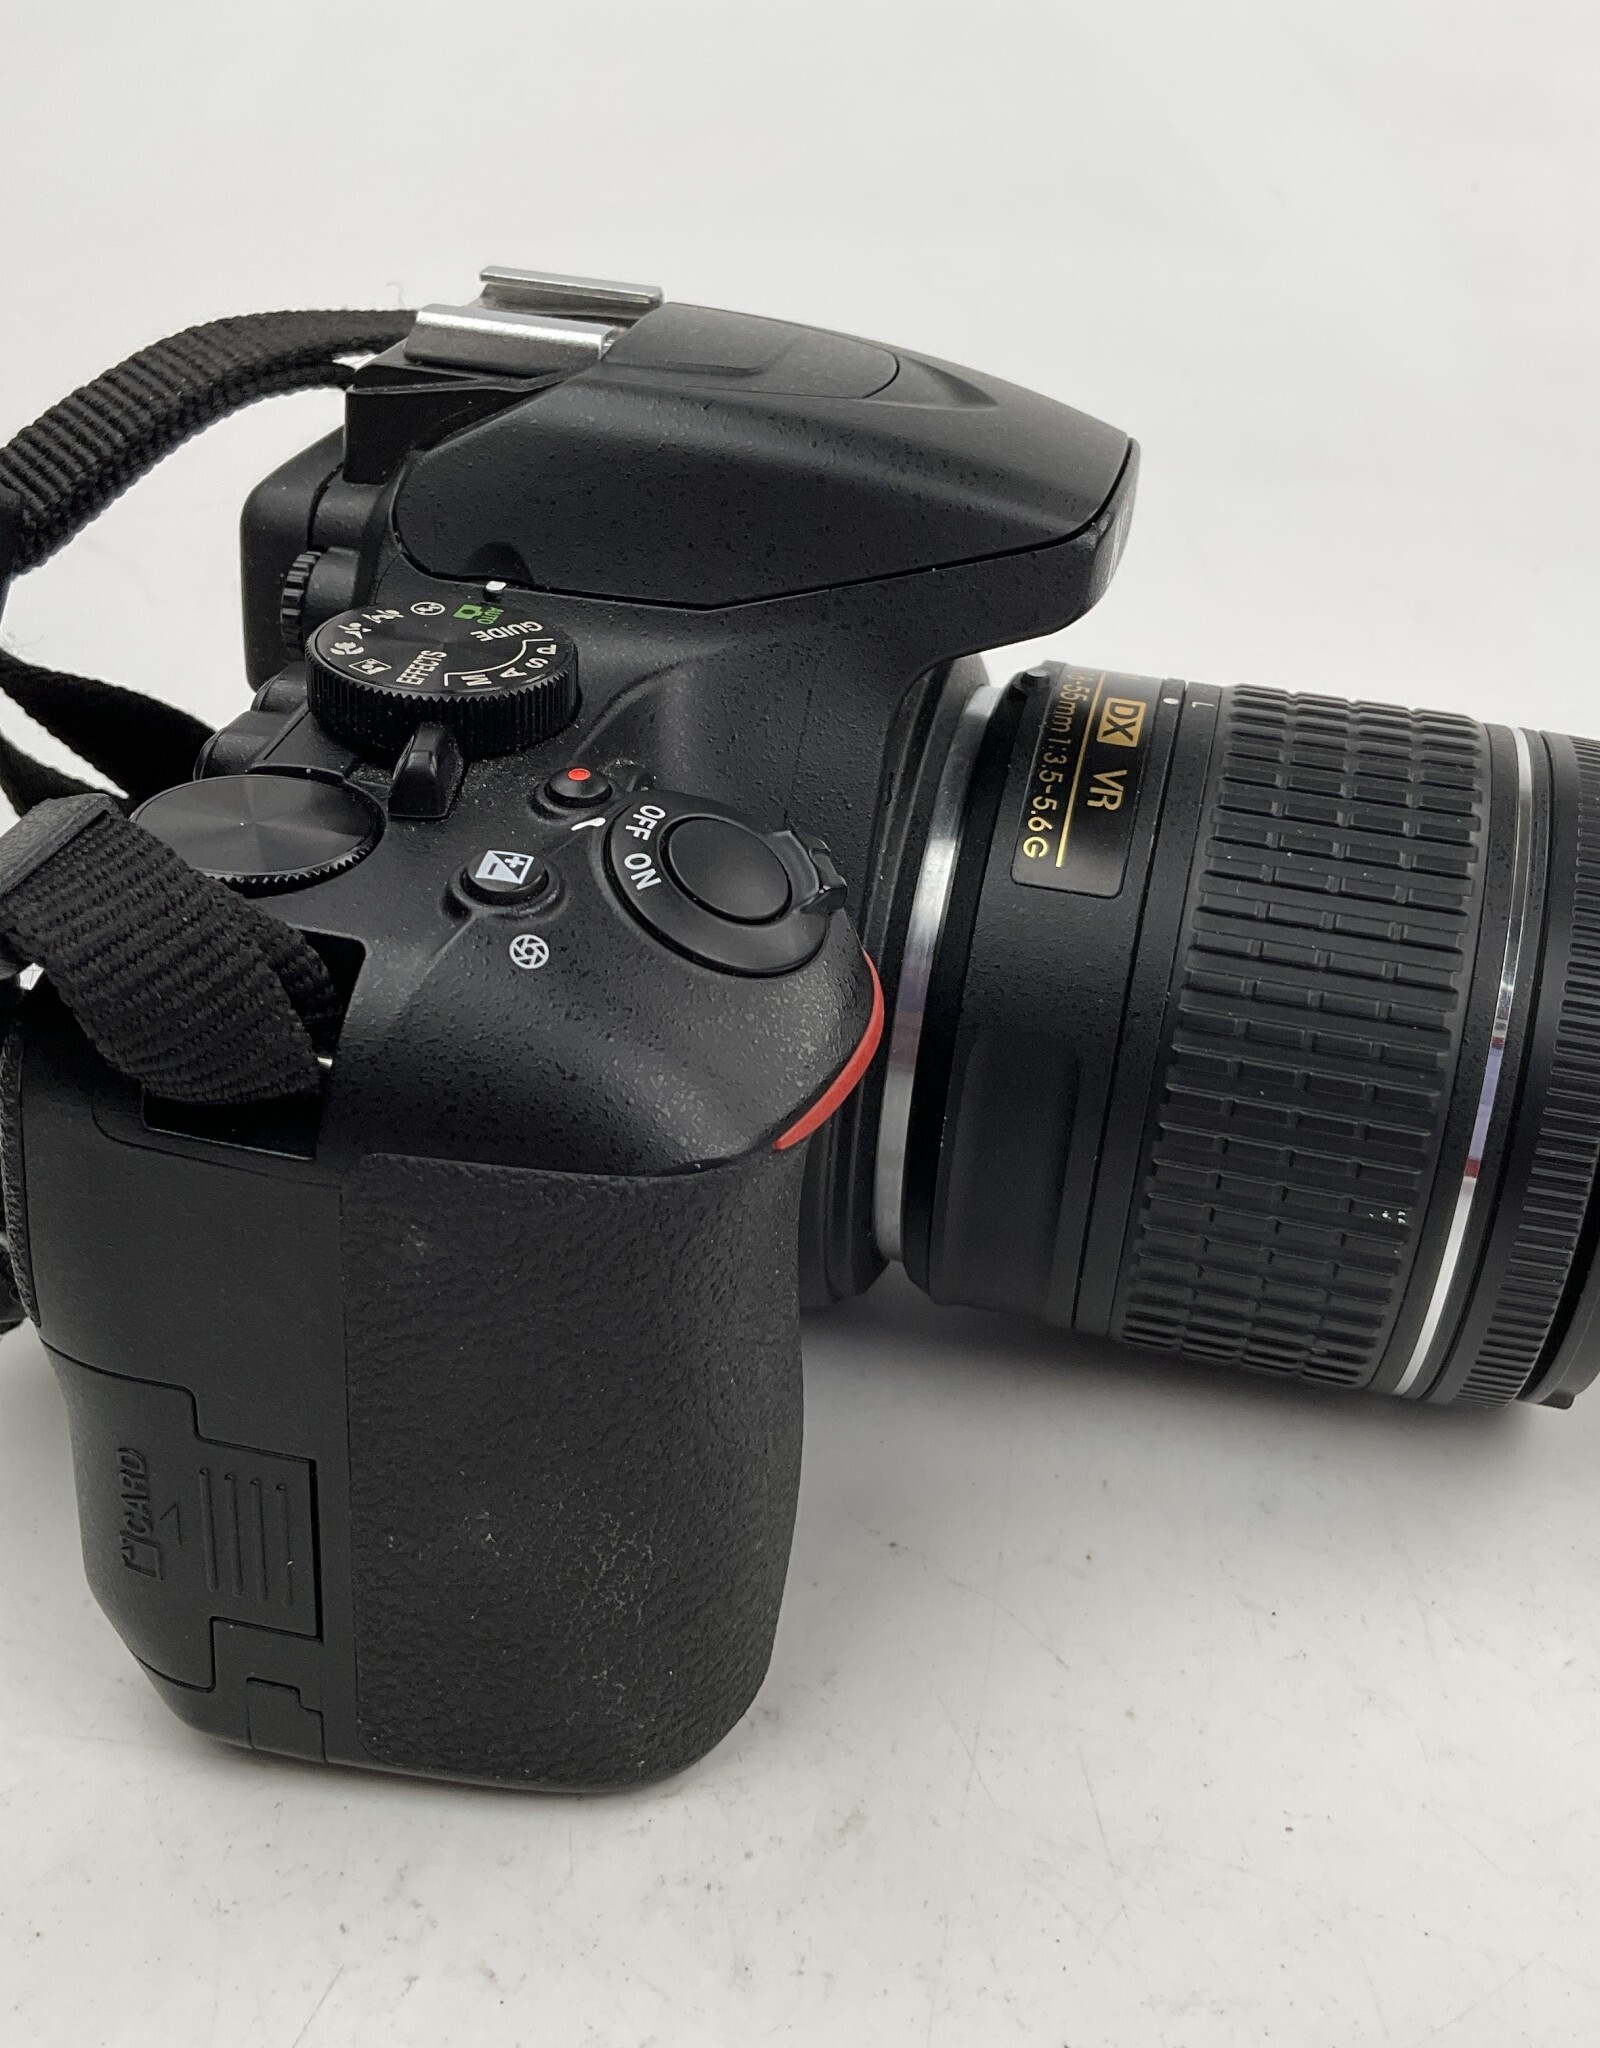 CANON Nikon D3500 Camera w/ 18-55mm Used Good